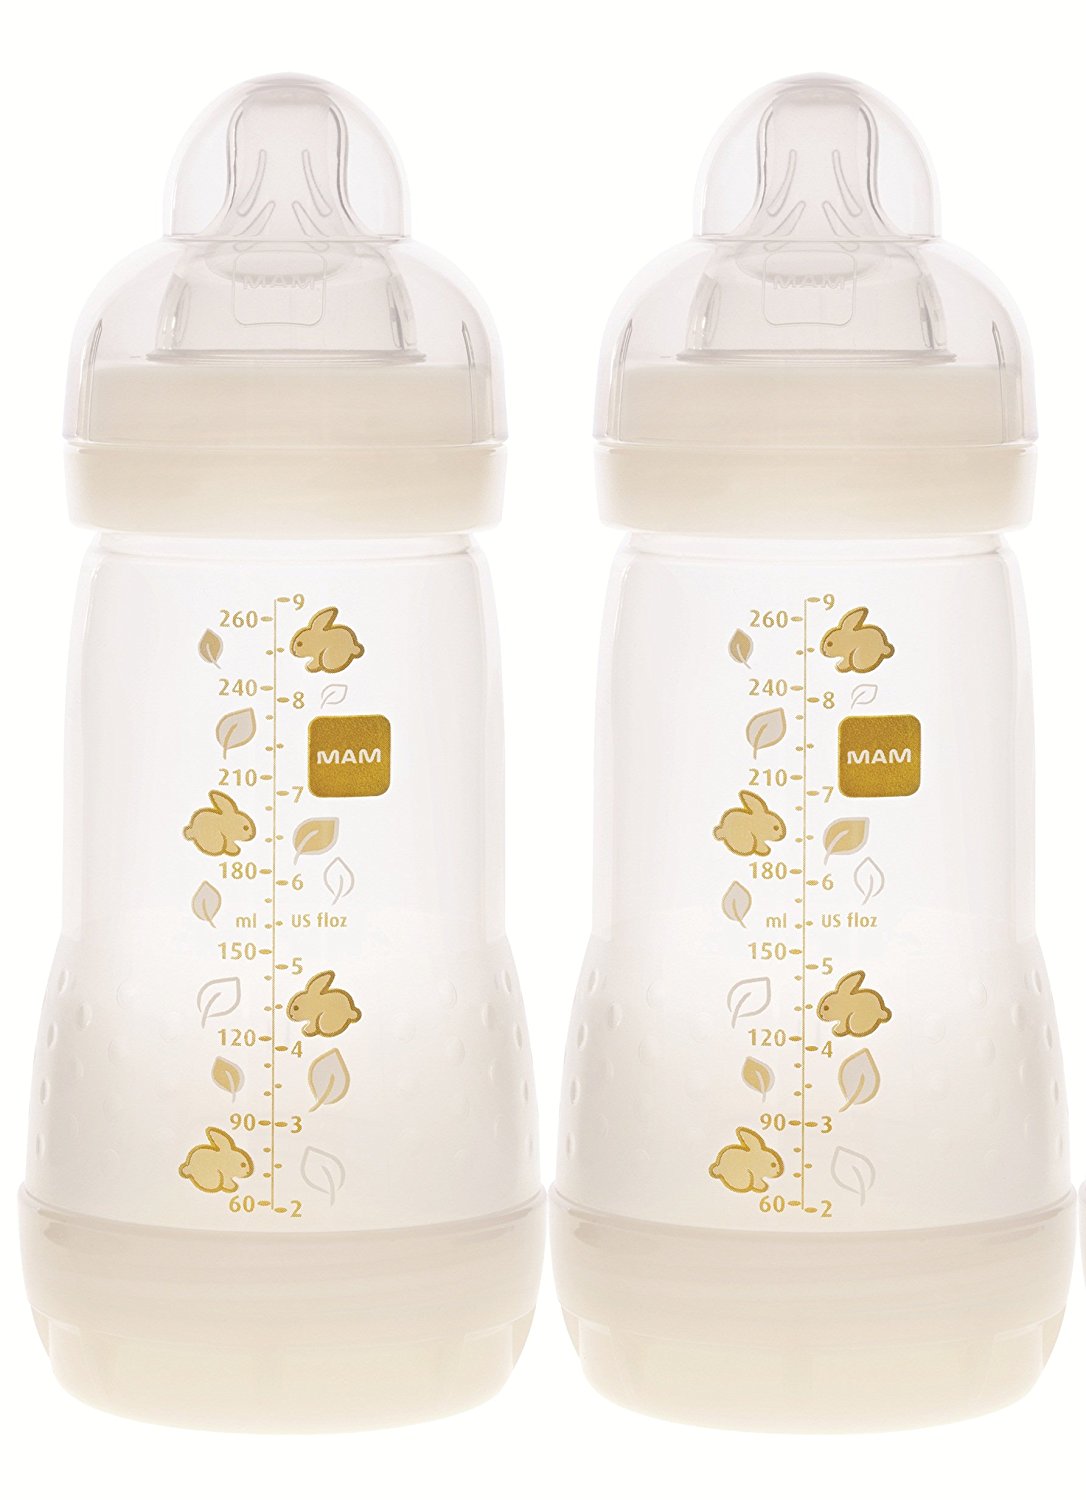 anti colic bottles, best baby bottles, best bottles for breastfed babies, MAM bottles, bottles for breastfed babies